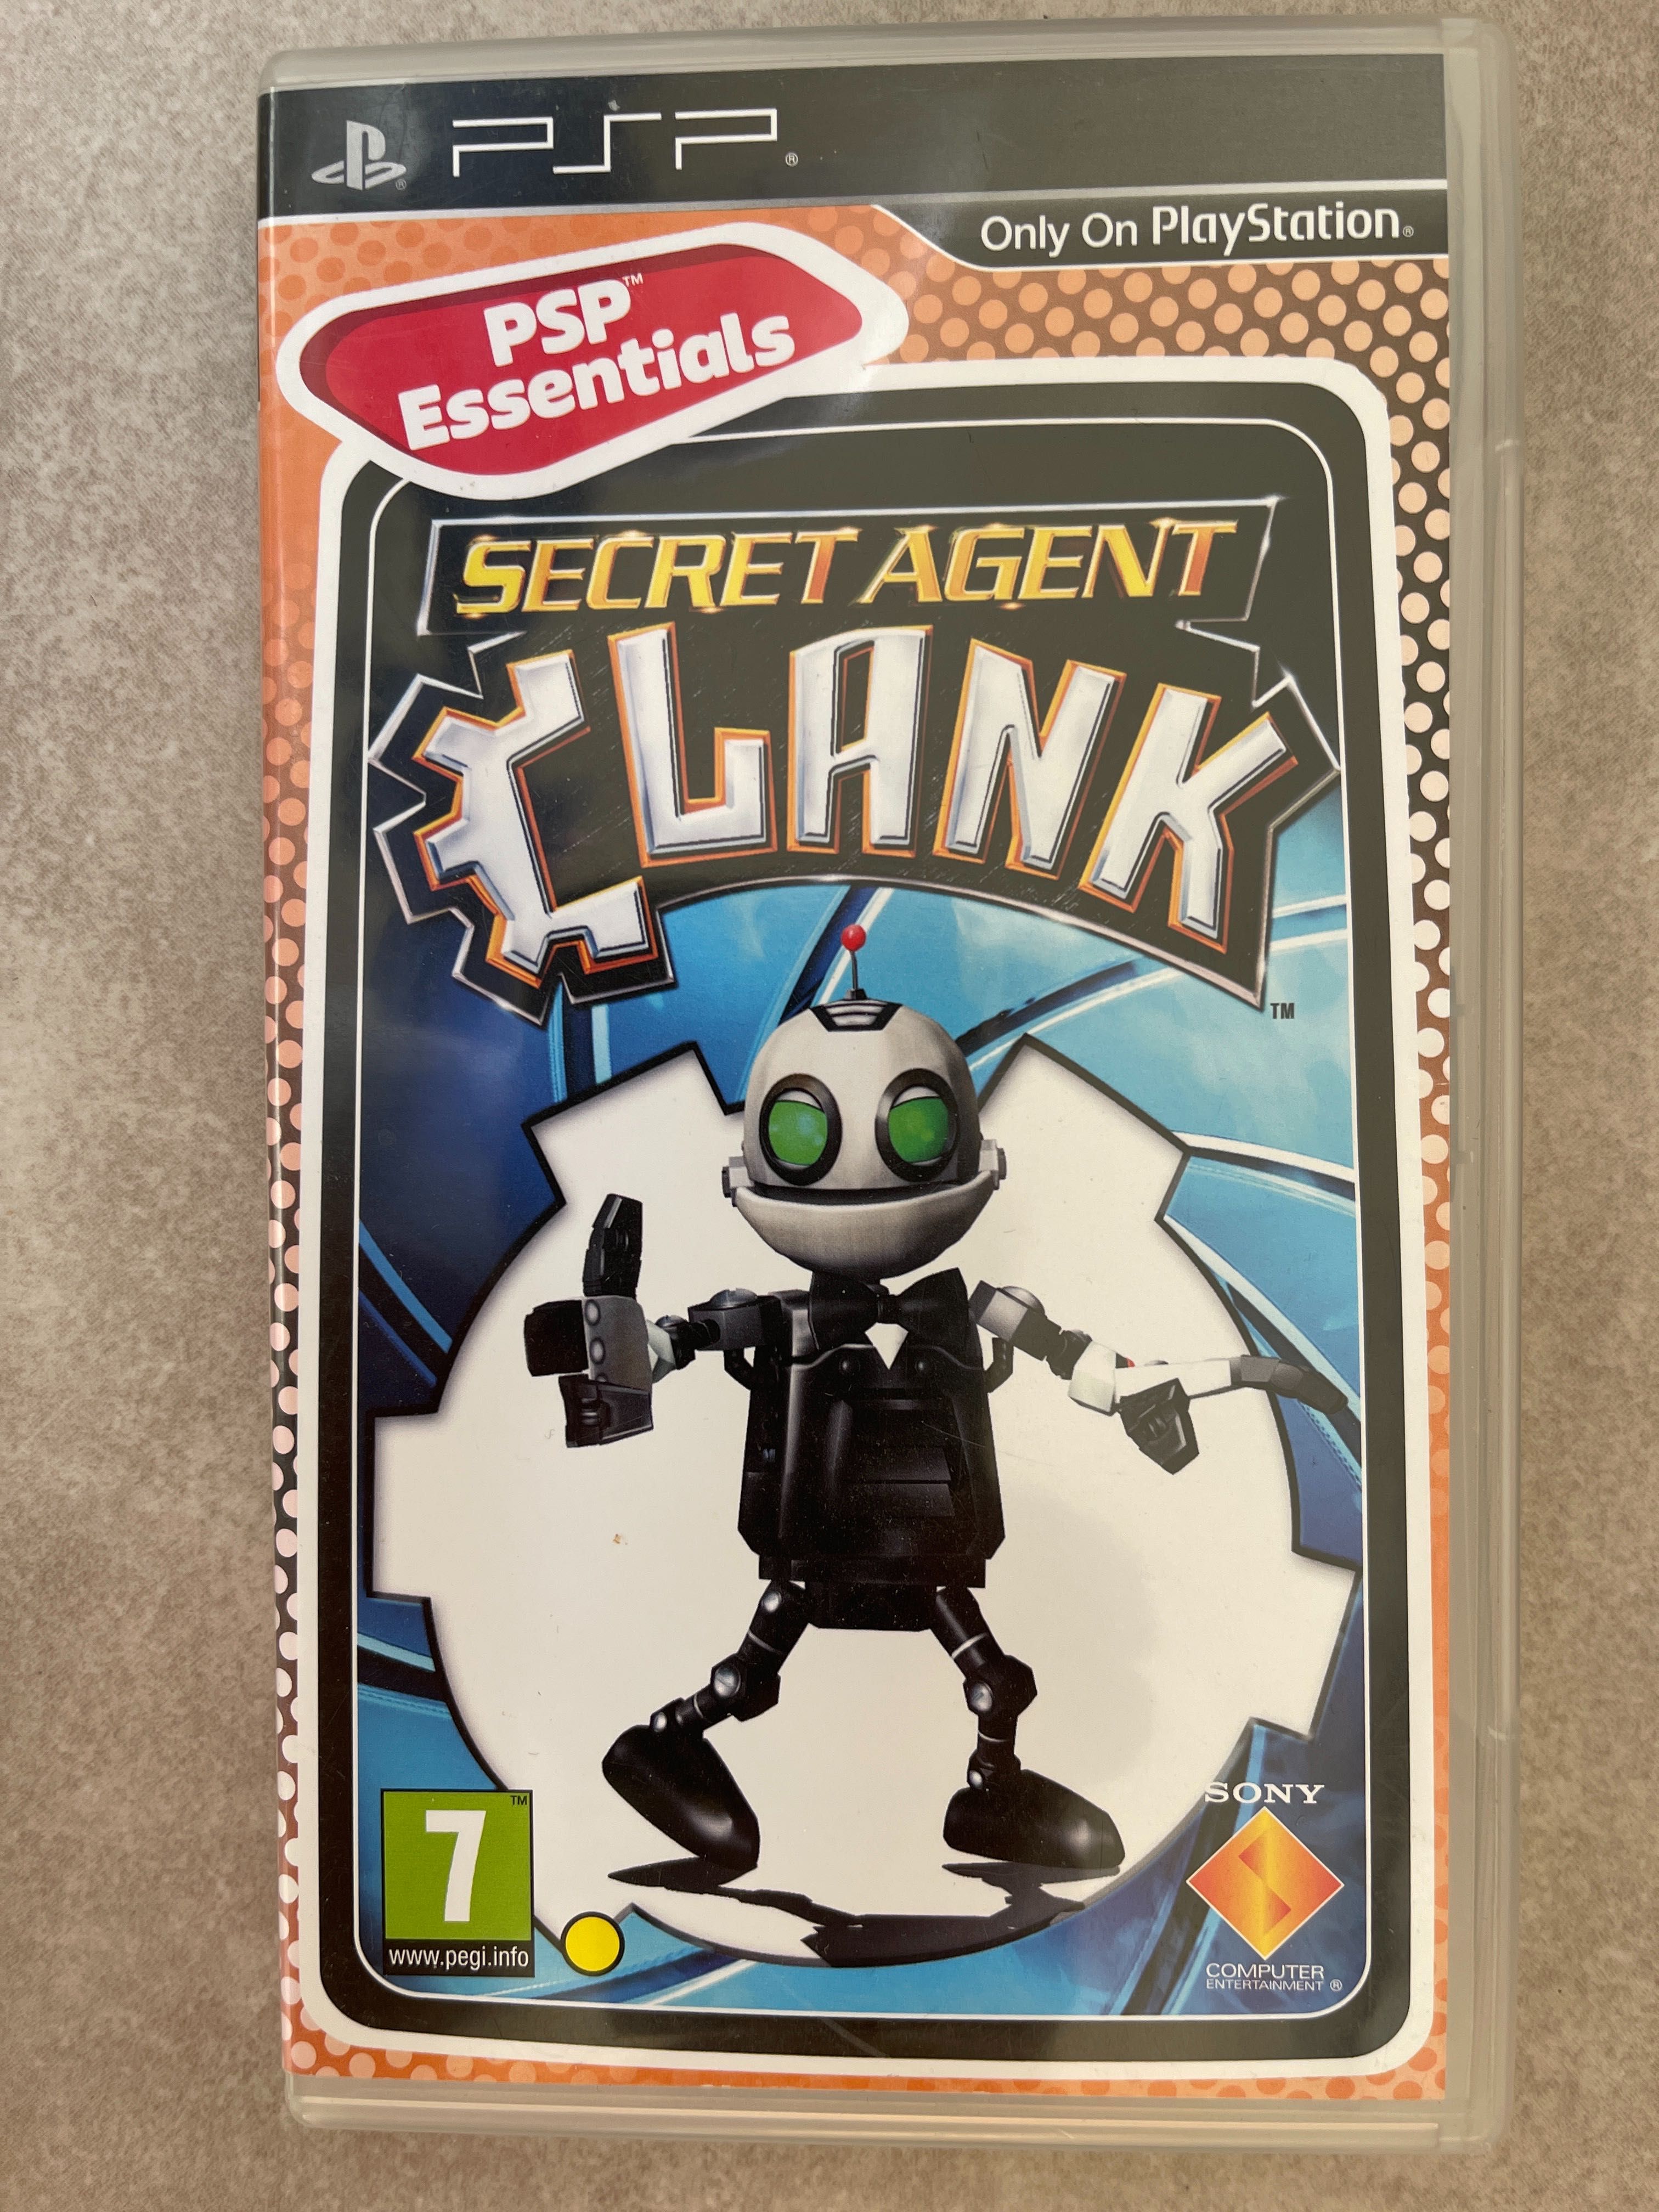 PSP game Secret Agent Clank